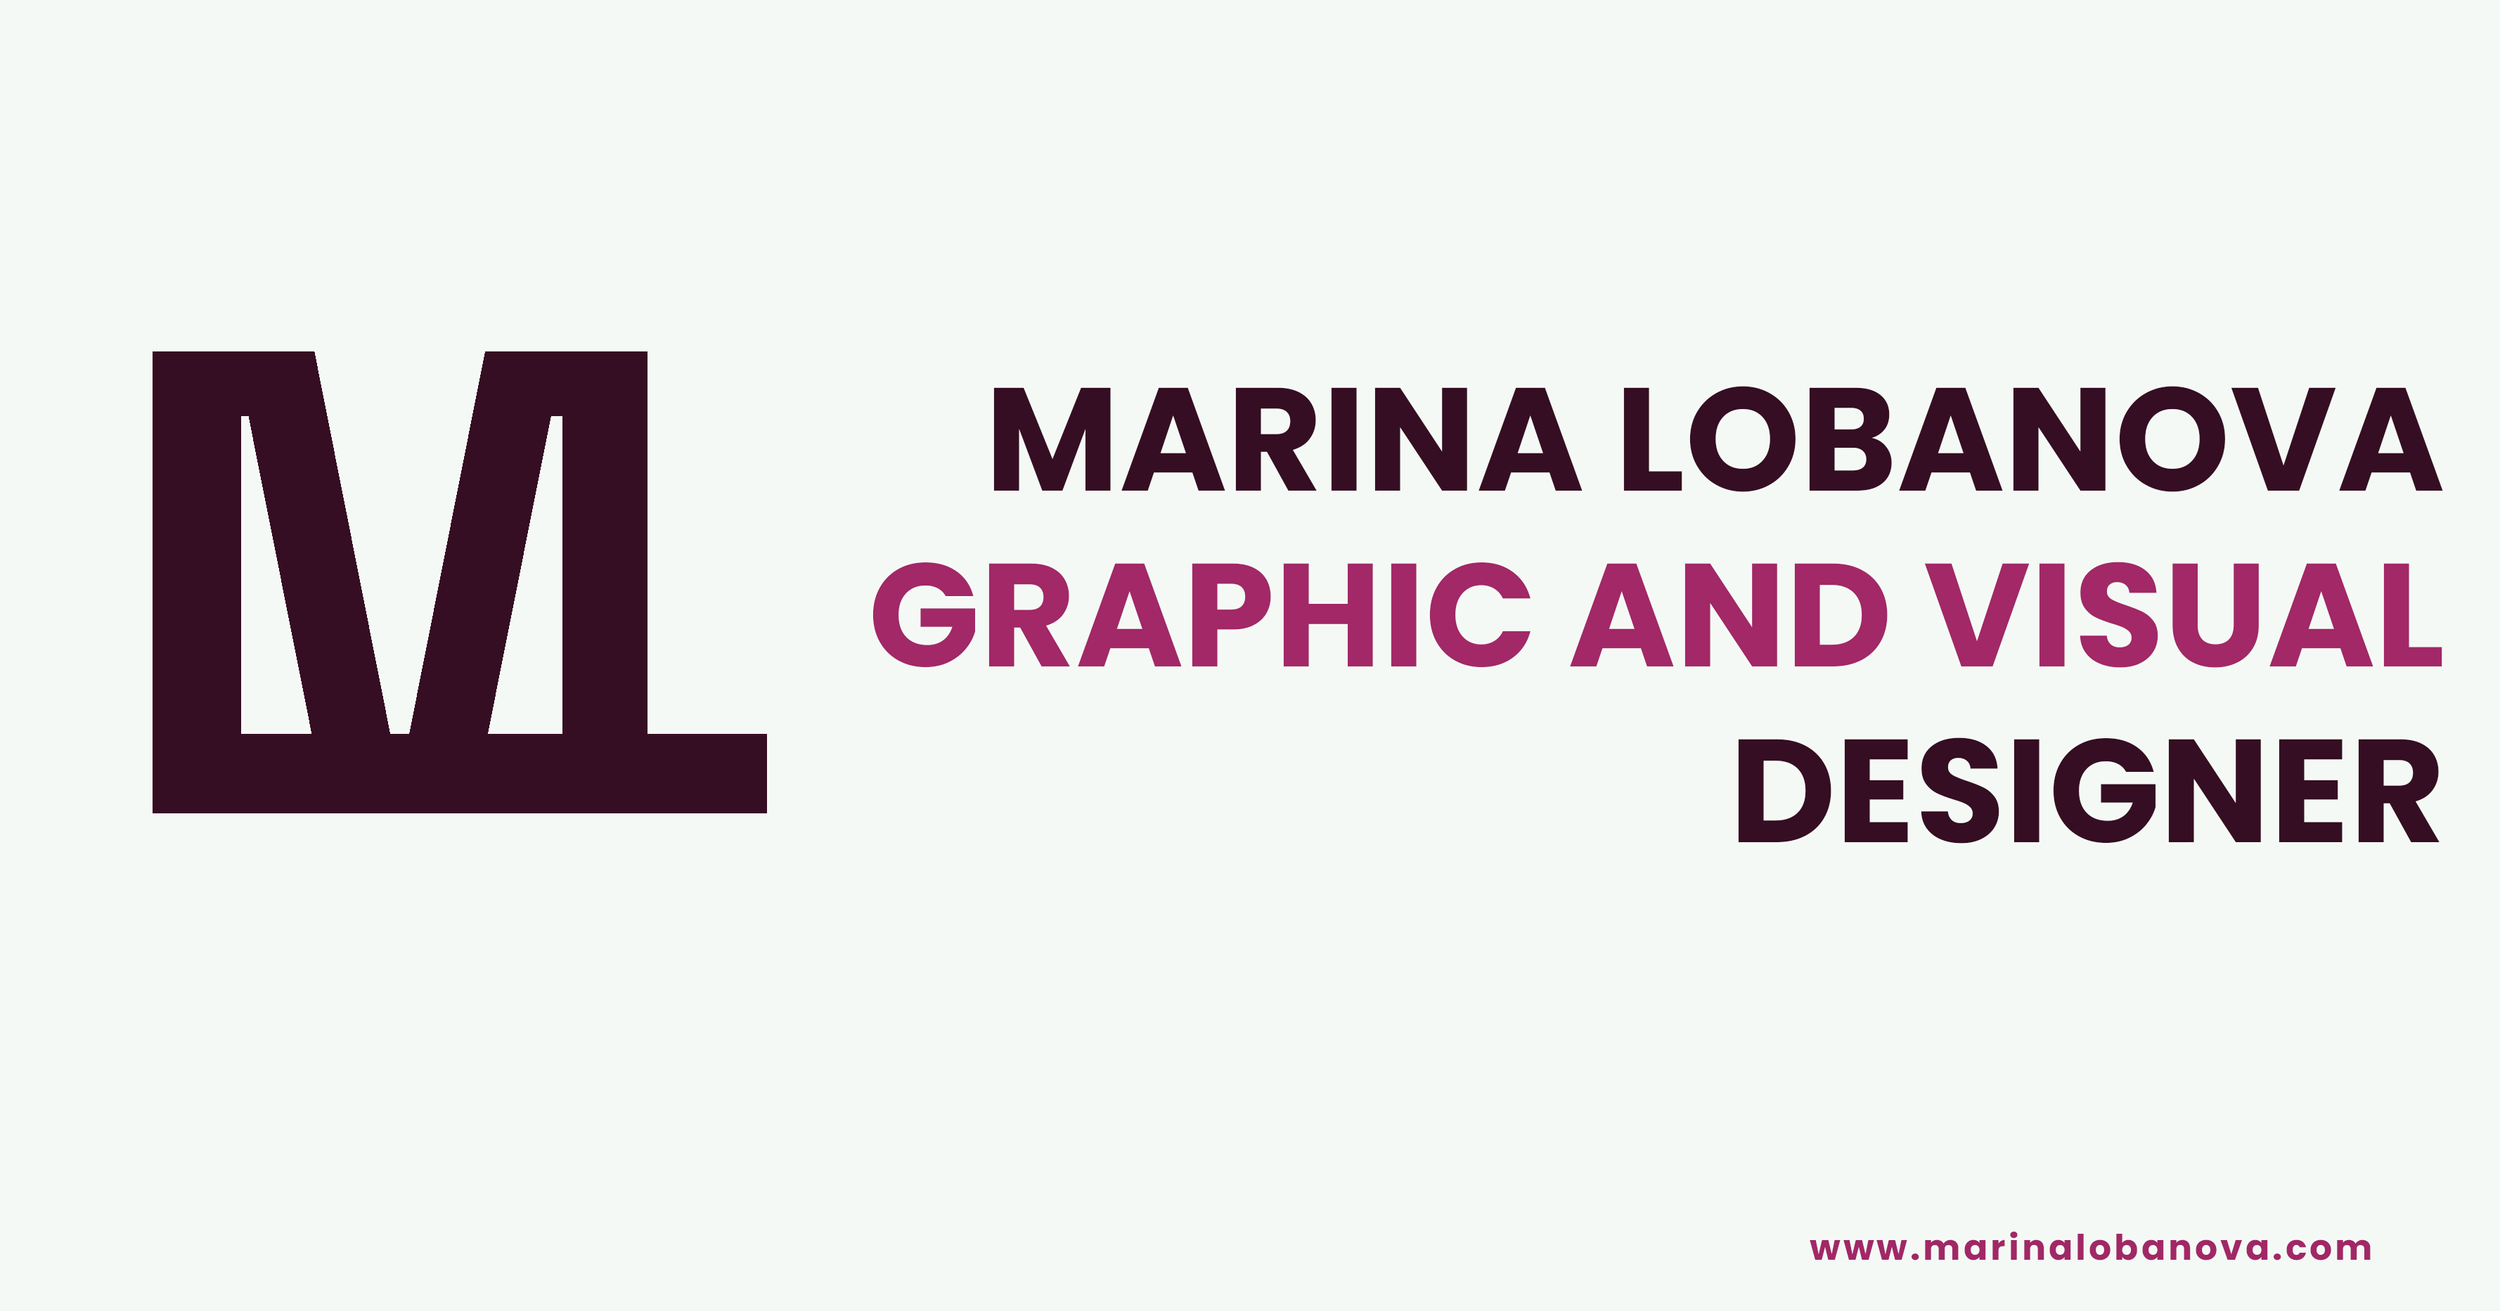 MARINA LOBANOVA
GRAPHIC AND VISUAL
DESIGNER